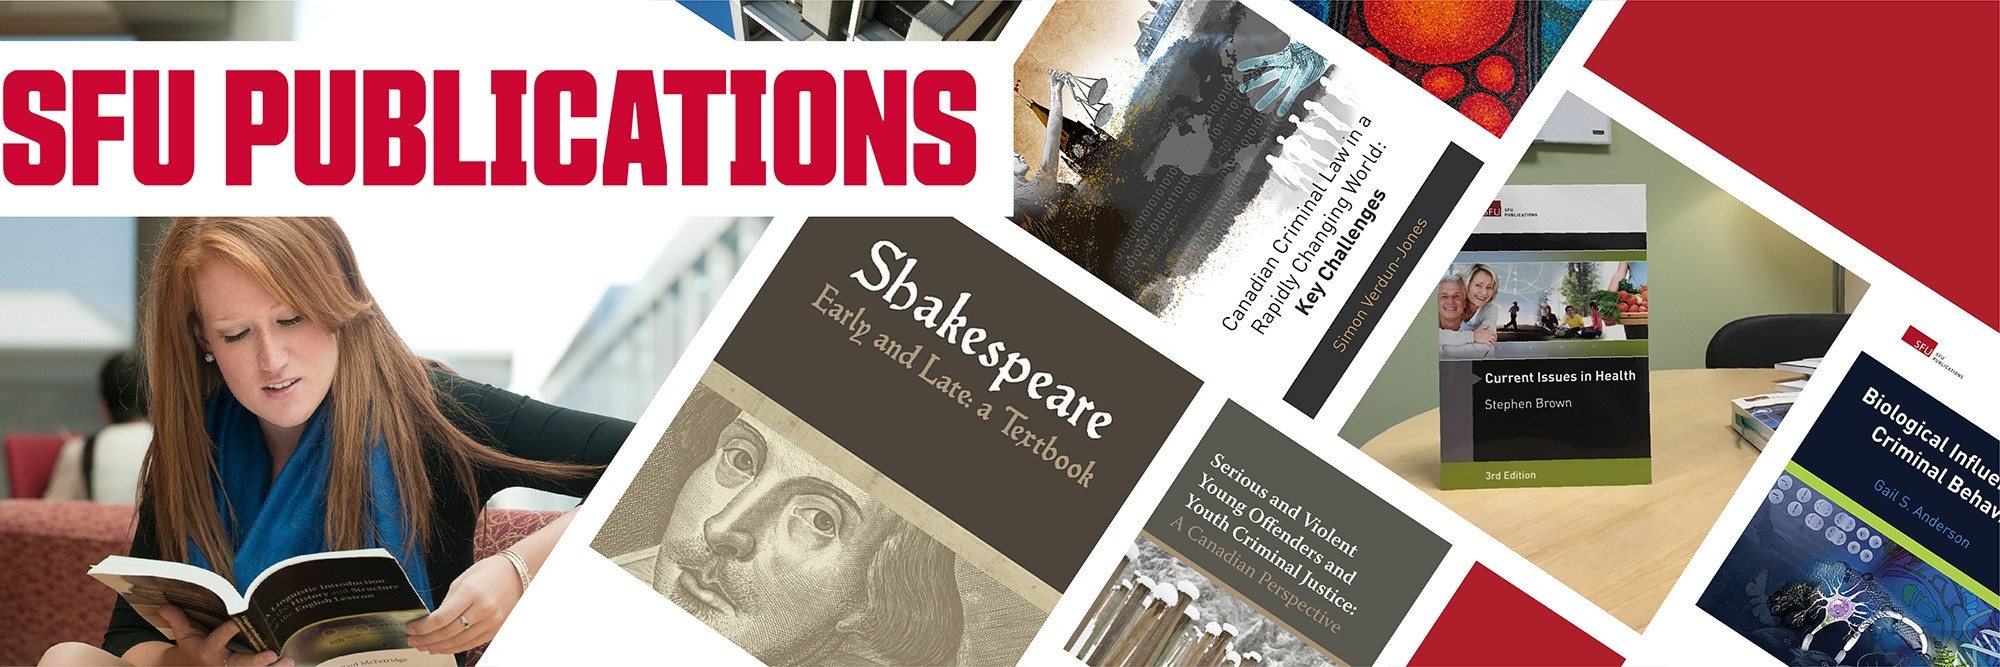 SFU Publications: publish your university textbooks with us